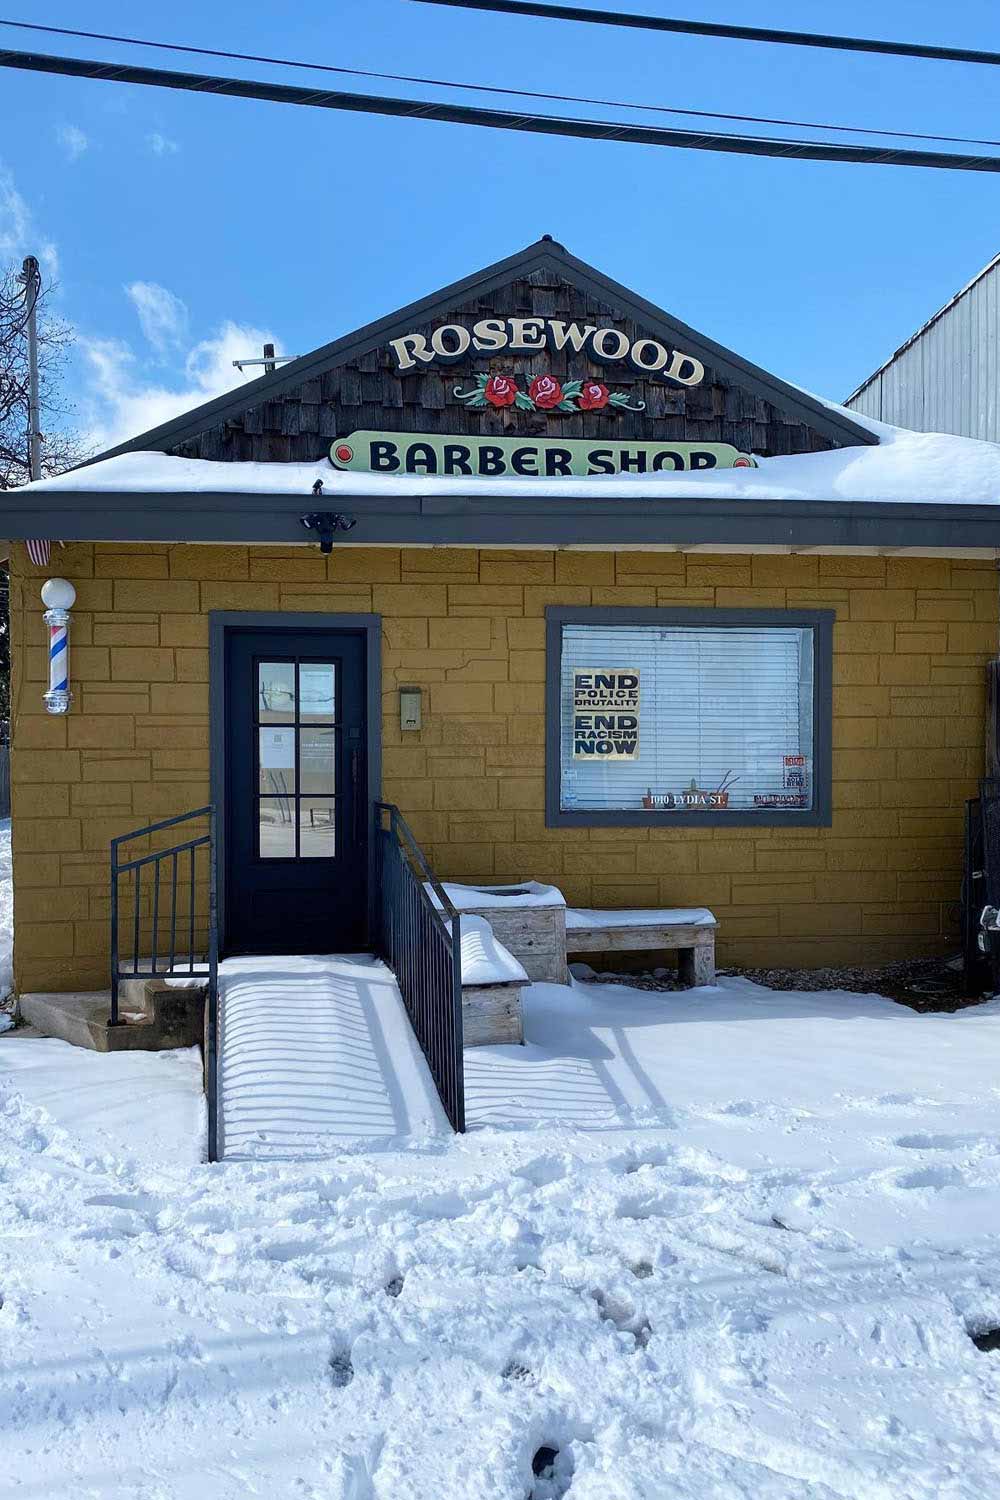 The Rosewood Barbershop 2